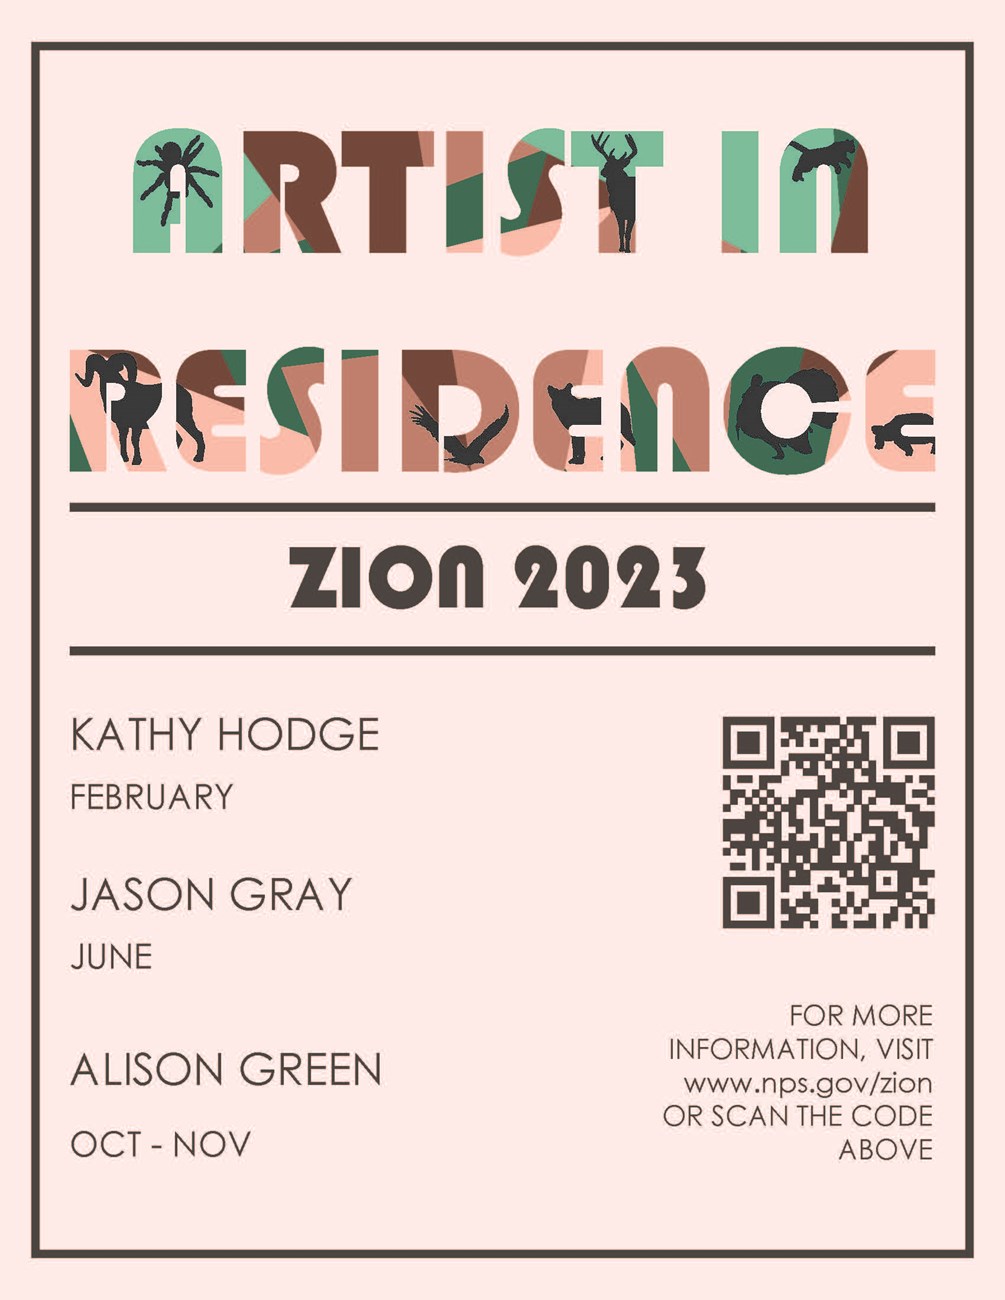 Artist In Residence Zion 2023 Kathy Hodge- February, Jason Gray- June, Allison Green- Oct- Nov For more information visit www.nps.gov/zion